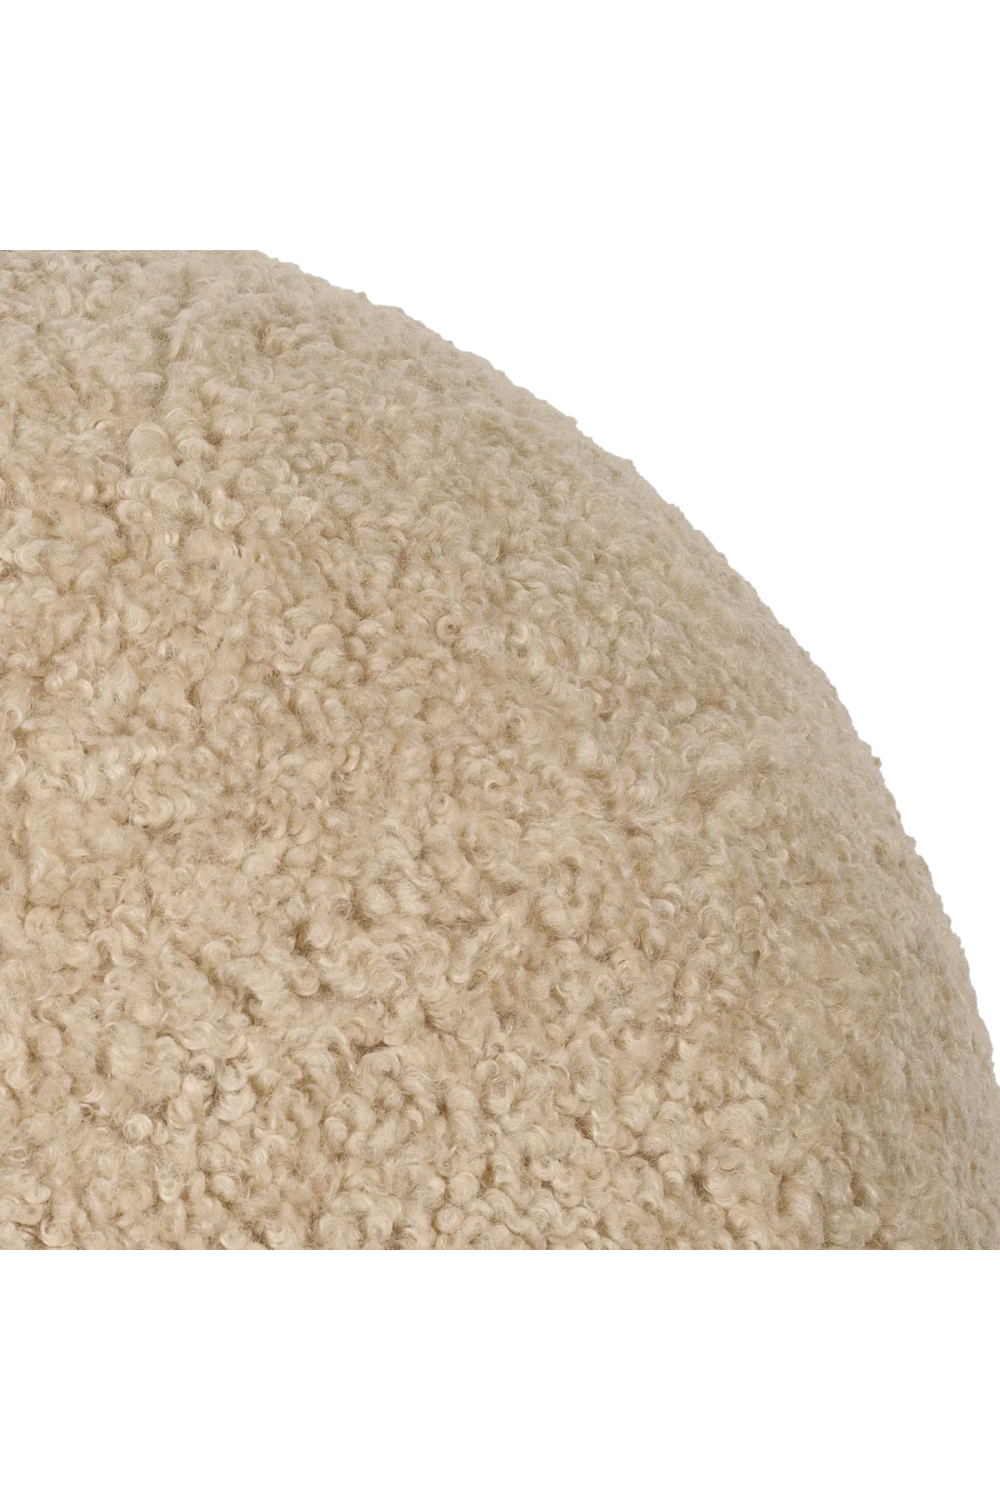 Canberra Sand Ball Pillow | Eichholtz Palla S | OROA.com